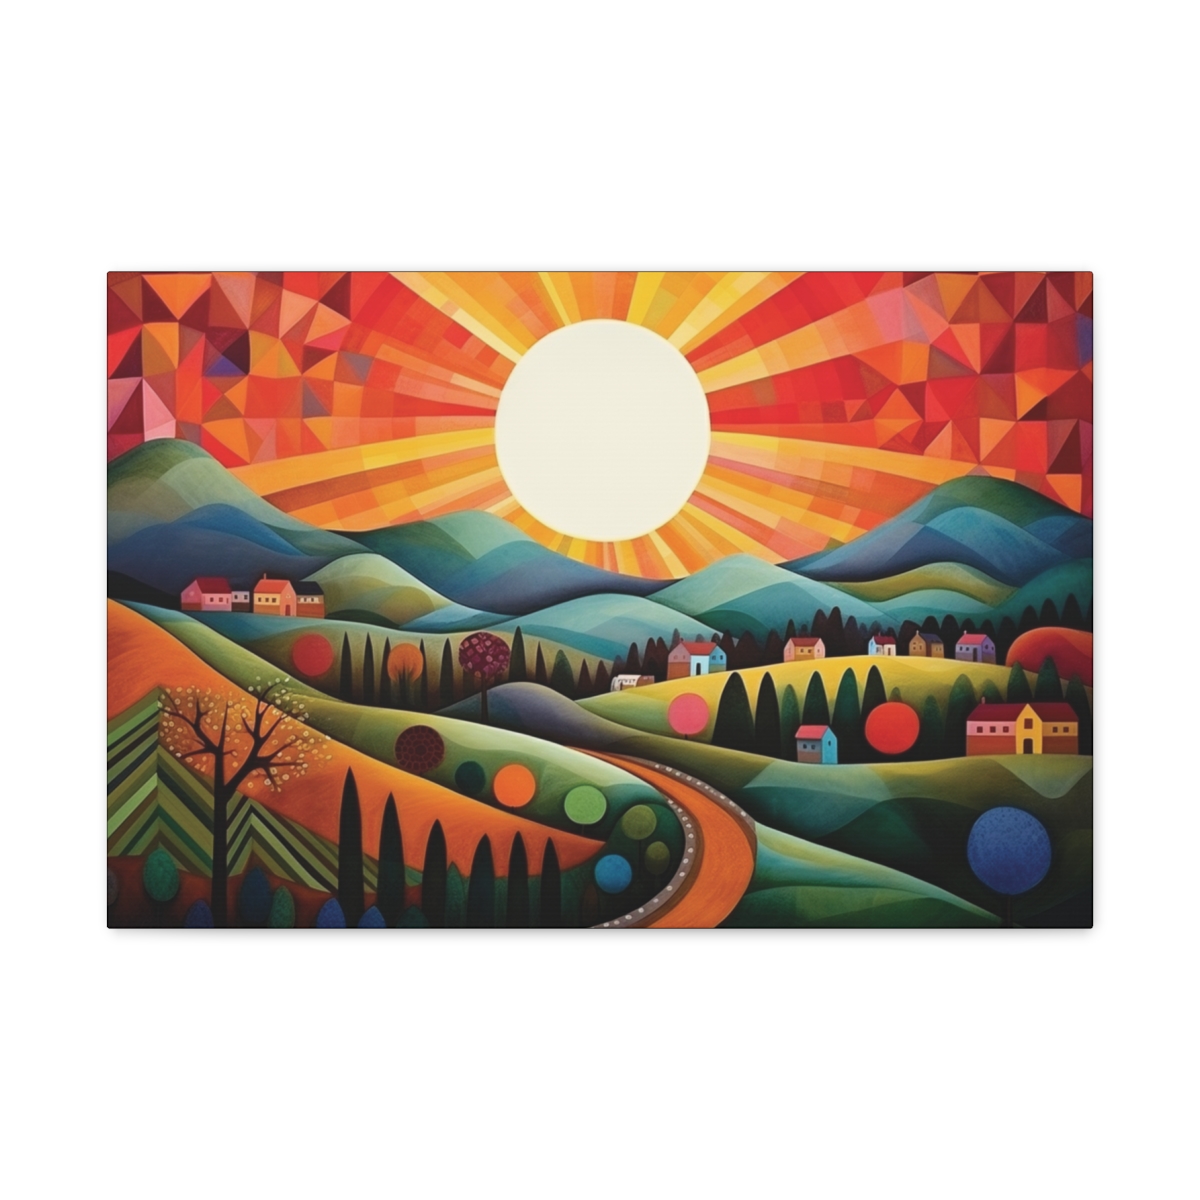 Boho Sun Art Canvas Print: Guiding Light Of The Morning